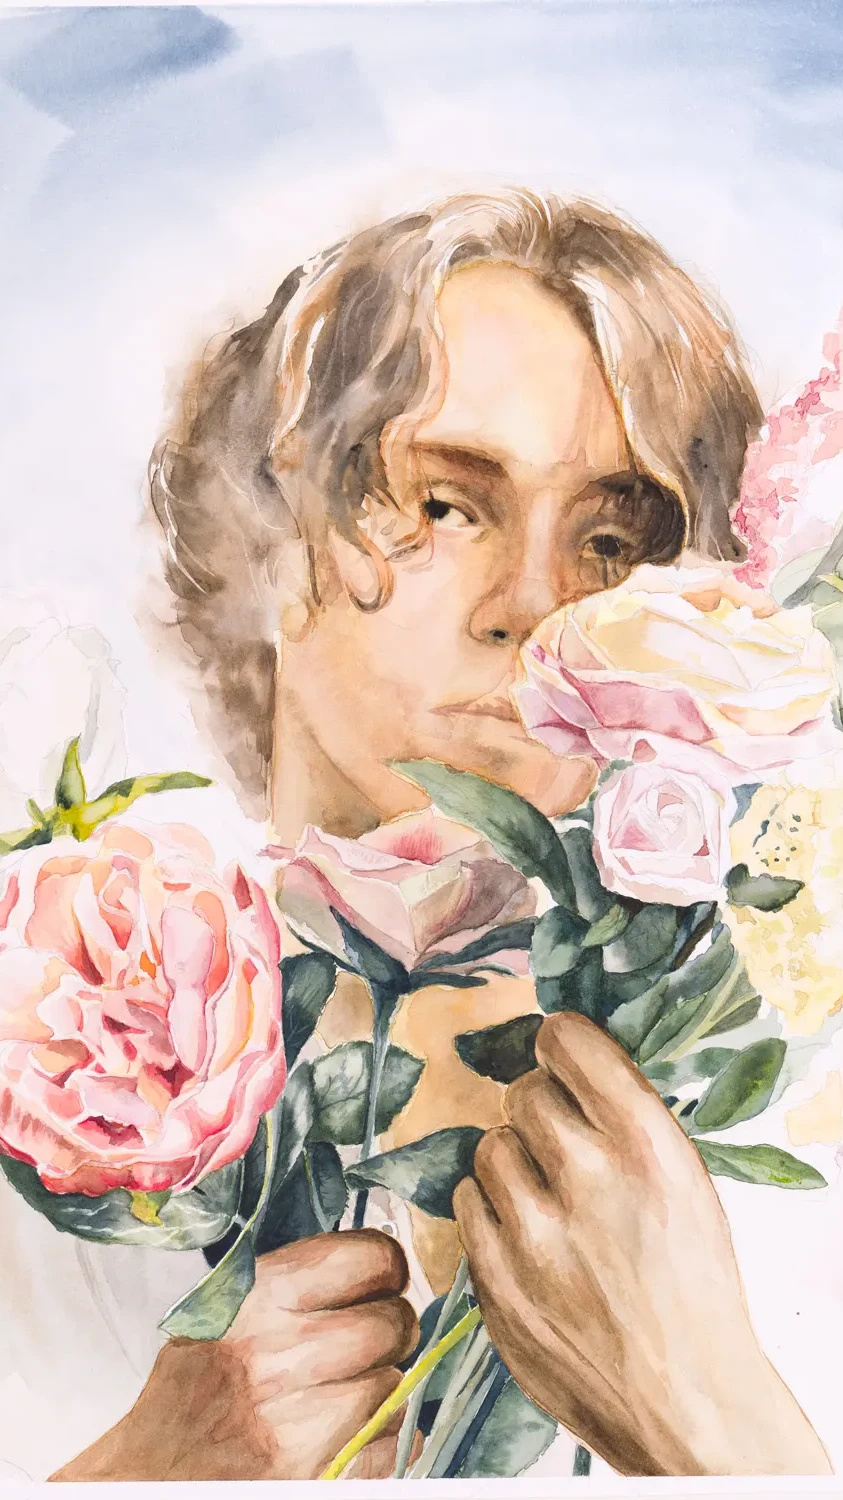 Romeo’s Portrait - Watercolor on Paper